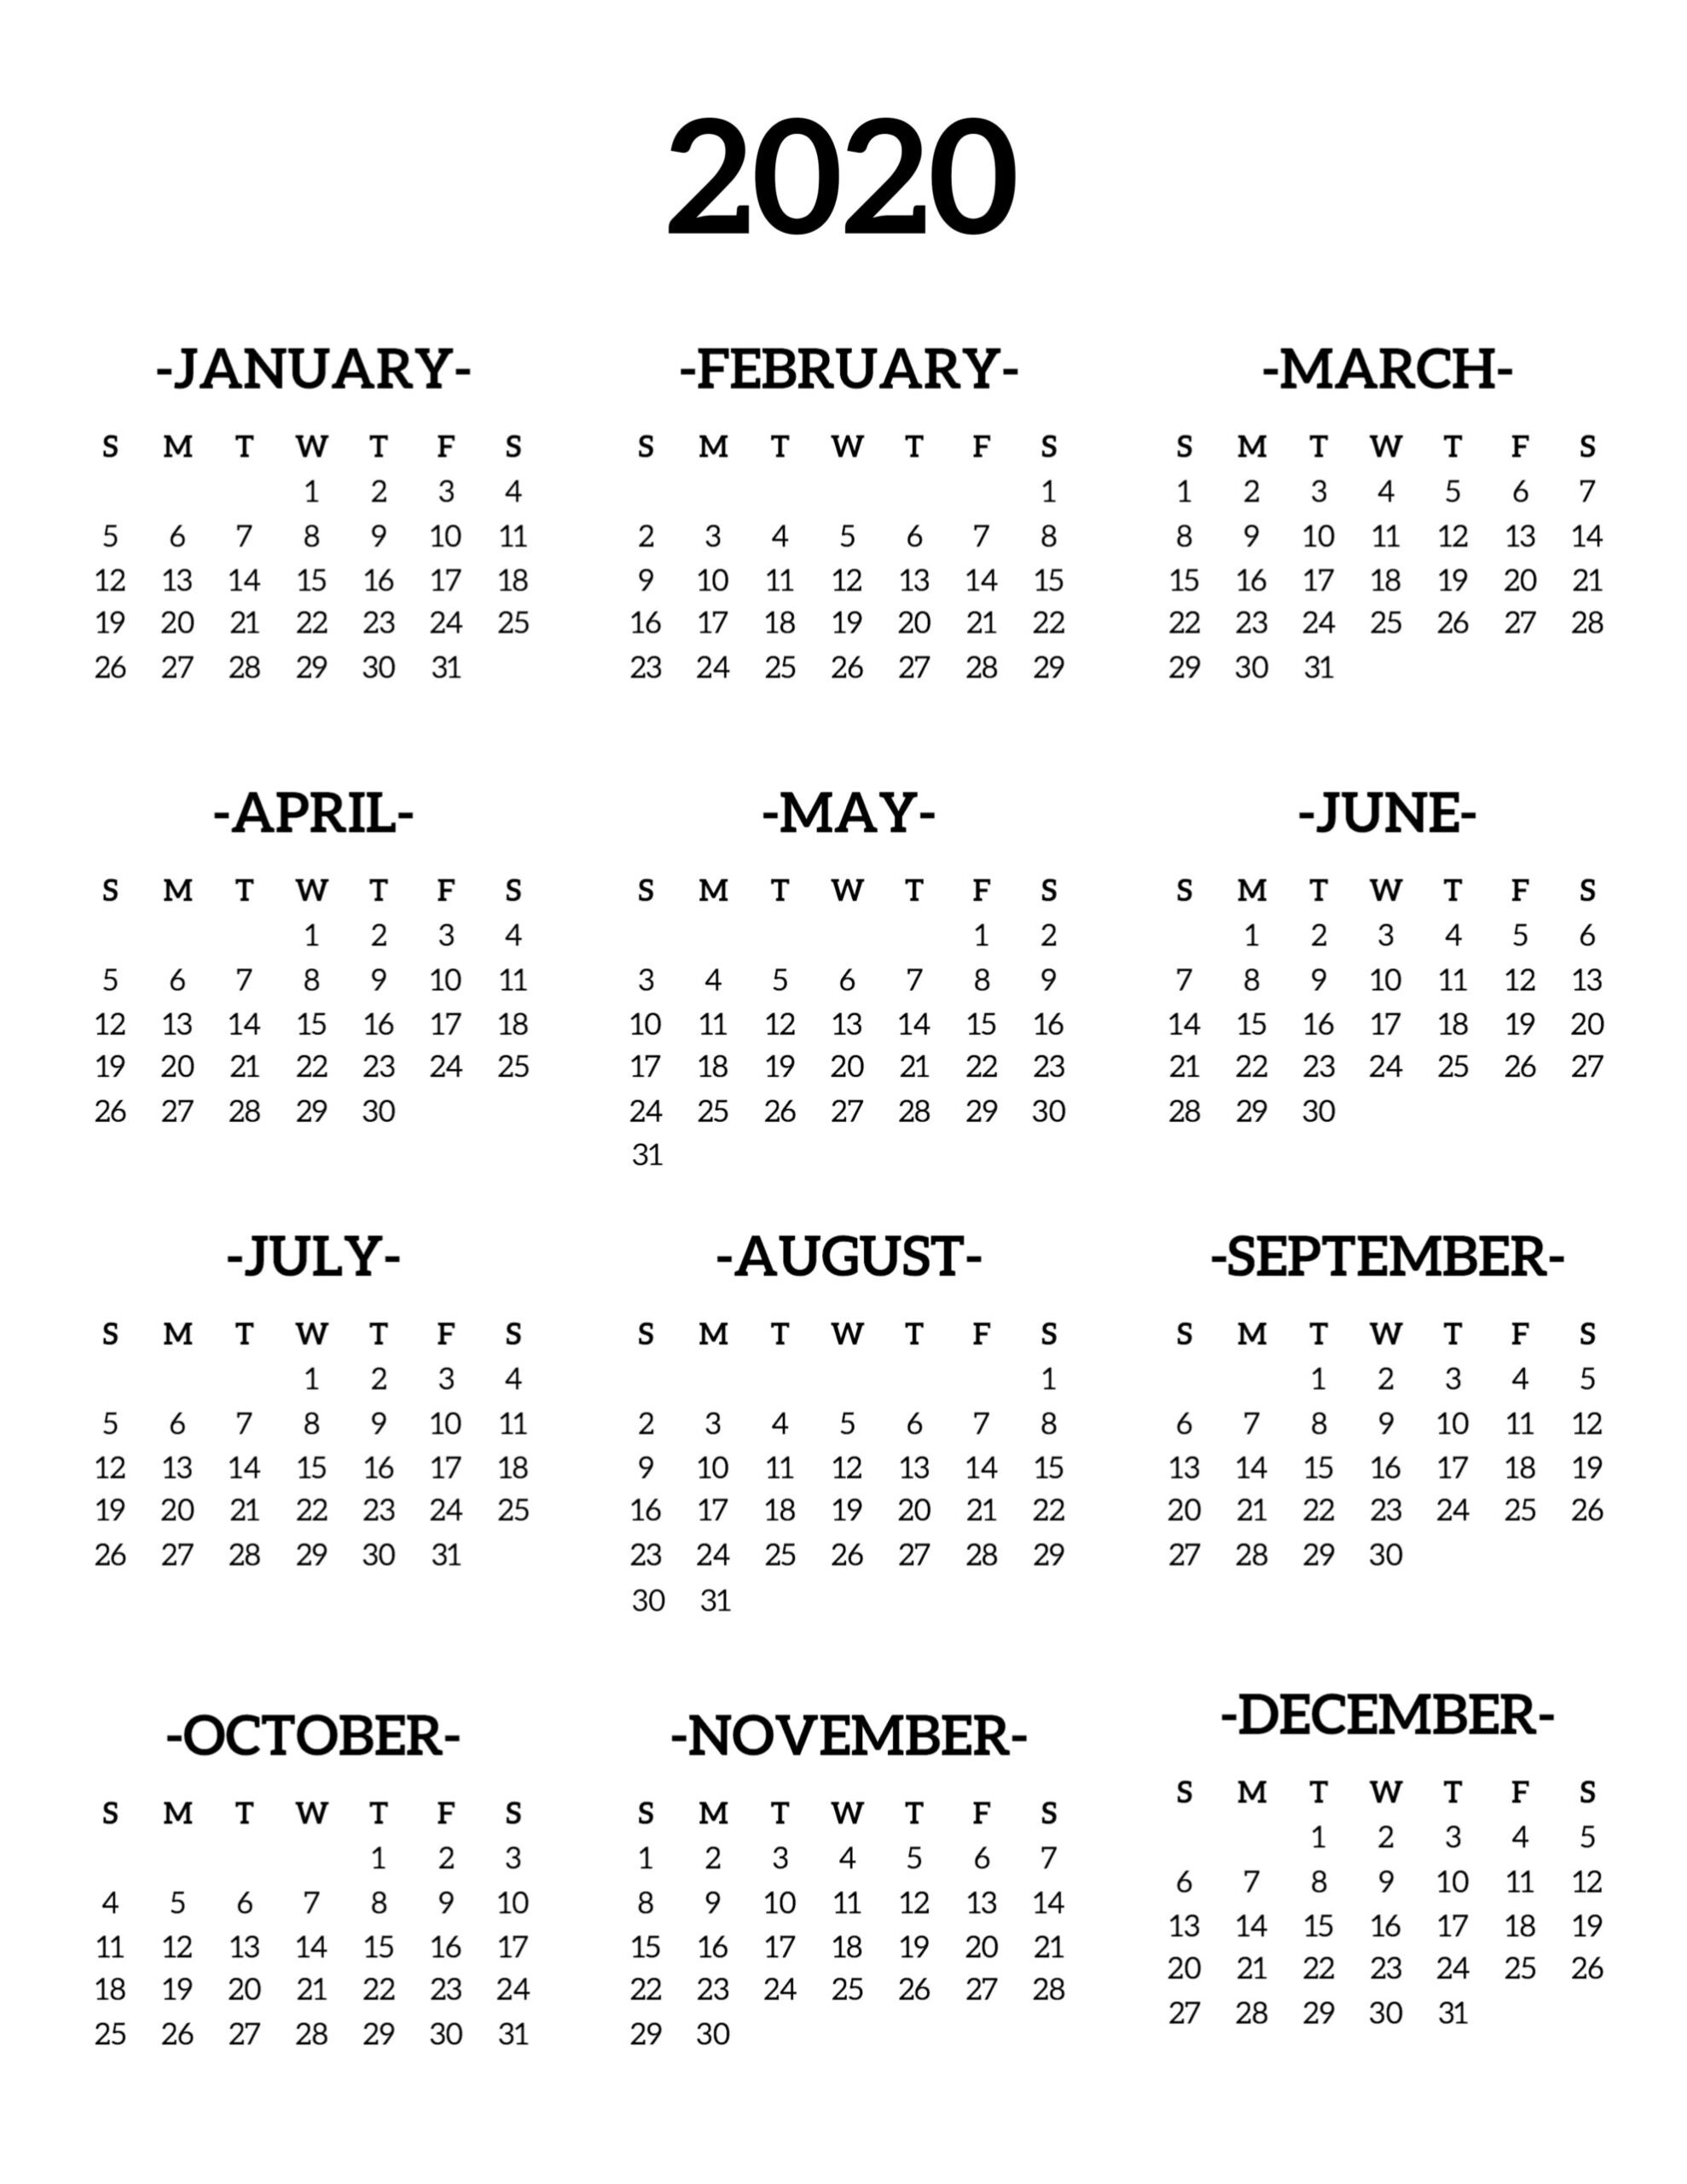 2020 Calendars To Fill In - Calendar Inspiration Design